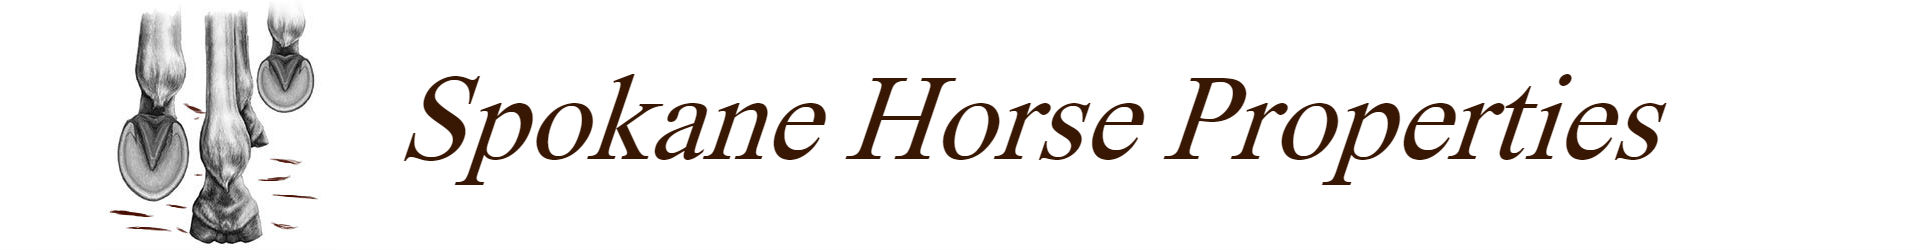 Spokane Horse Properties